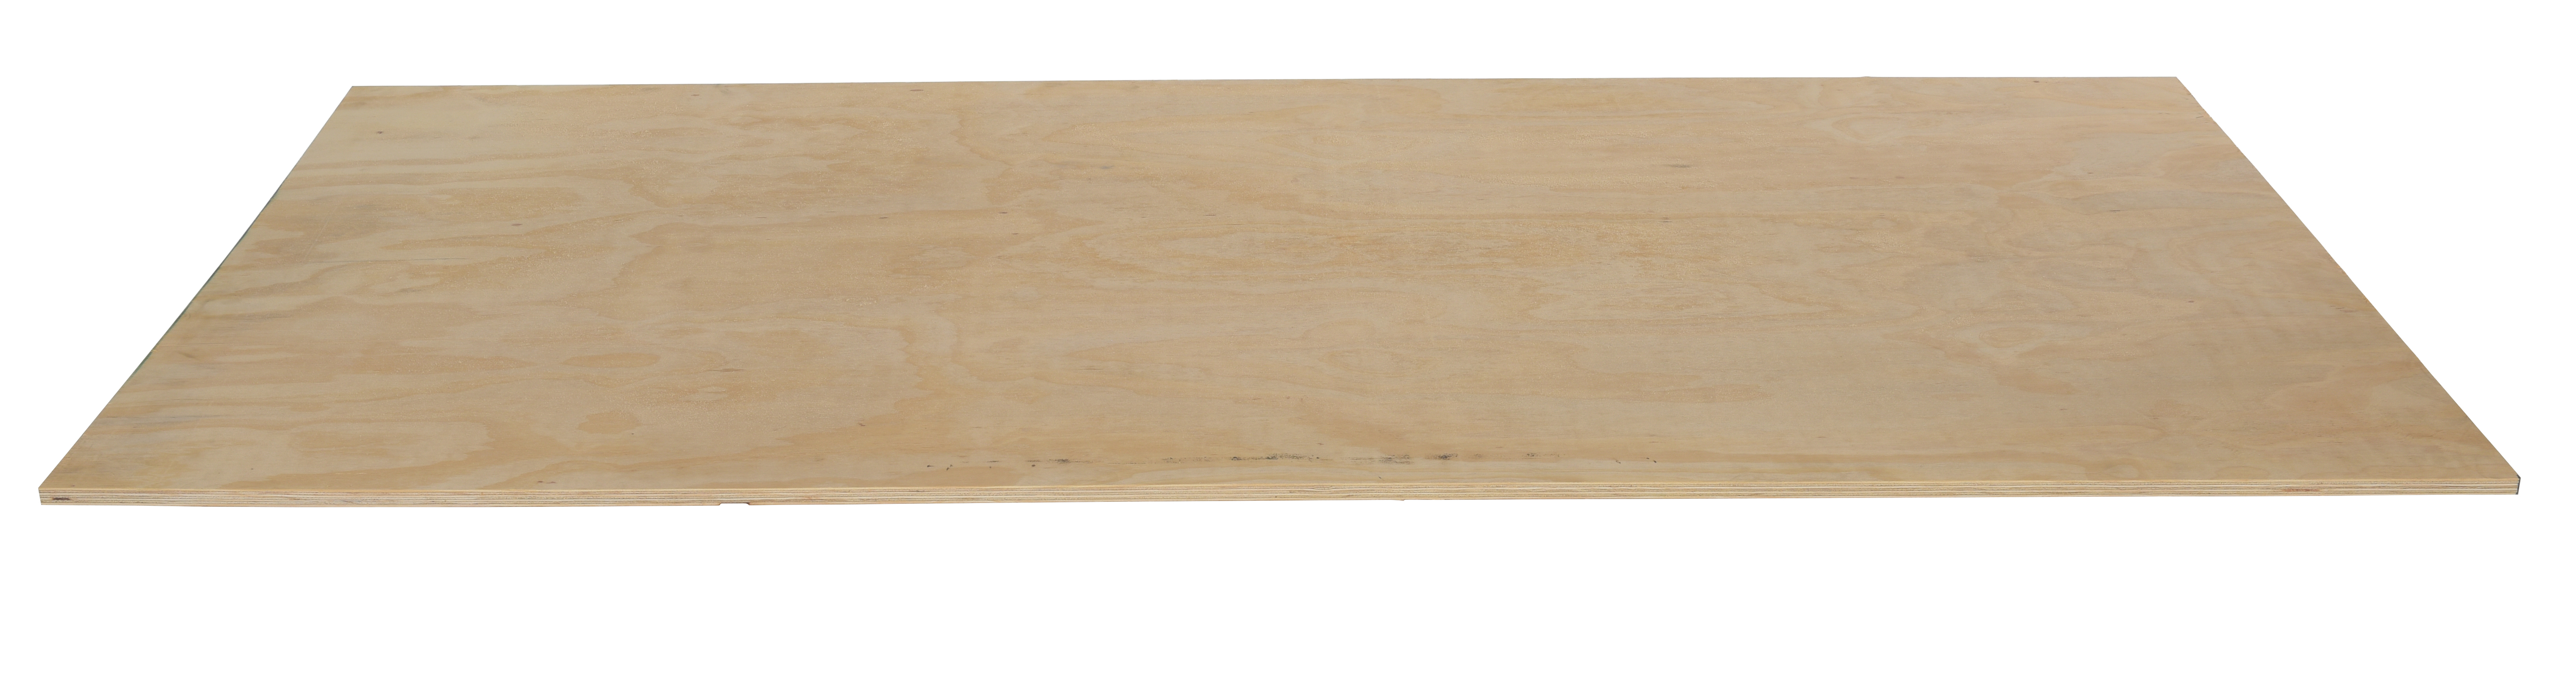 Flow Rack Option, Wood Top Shelf, 45.75 Inch Size